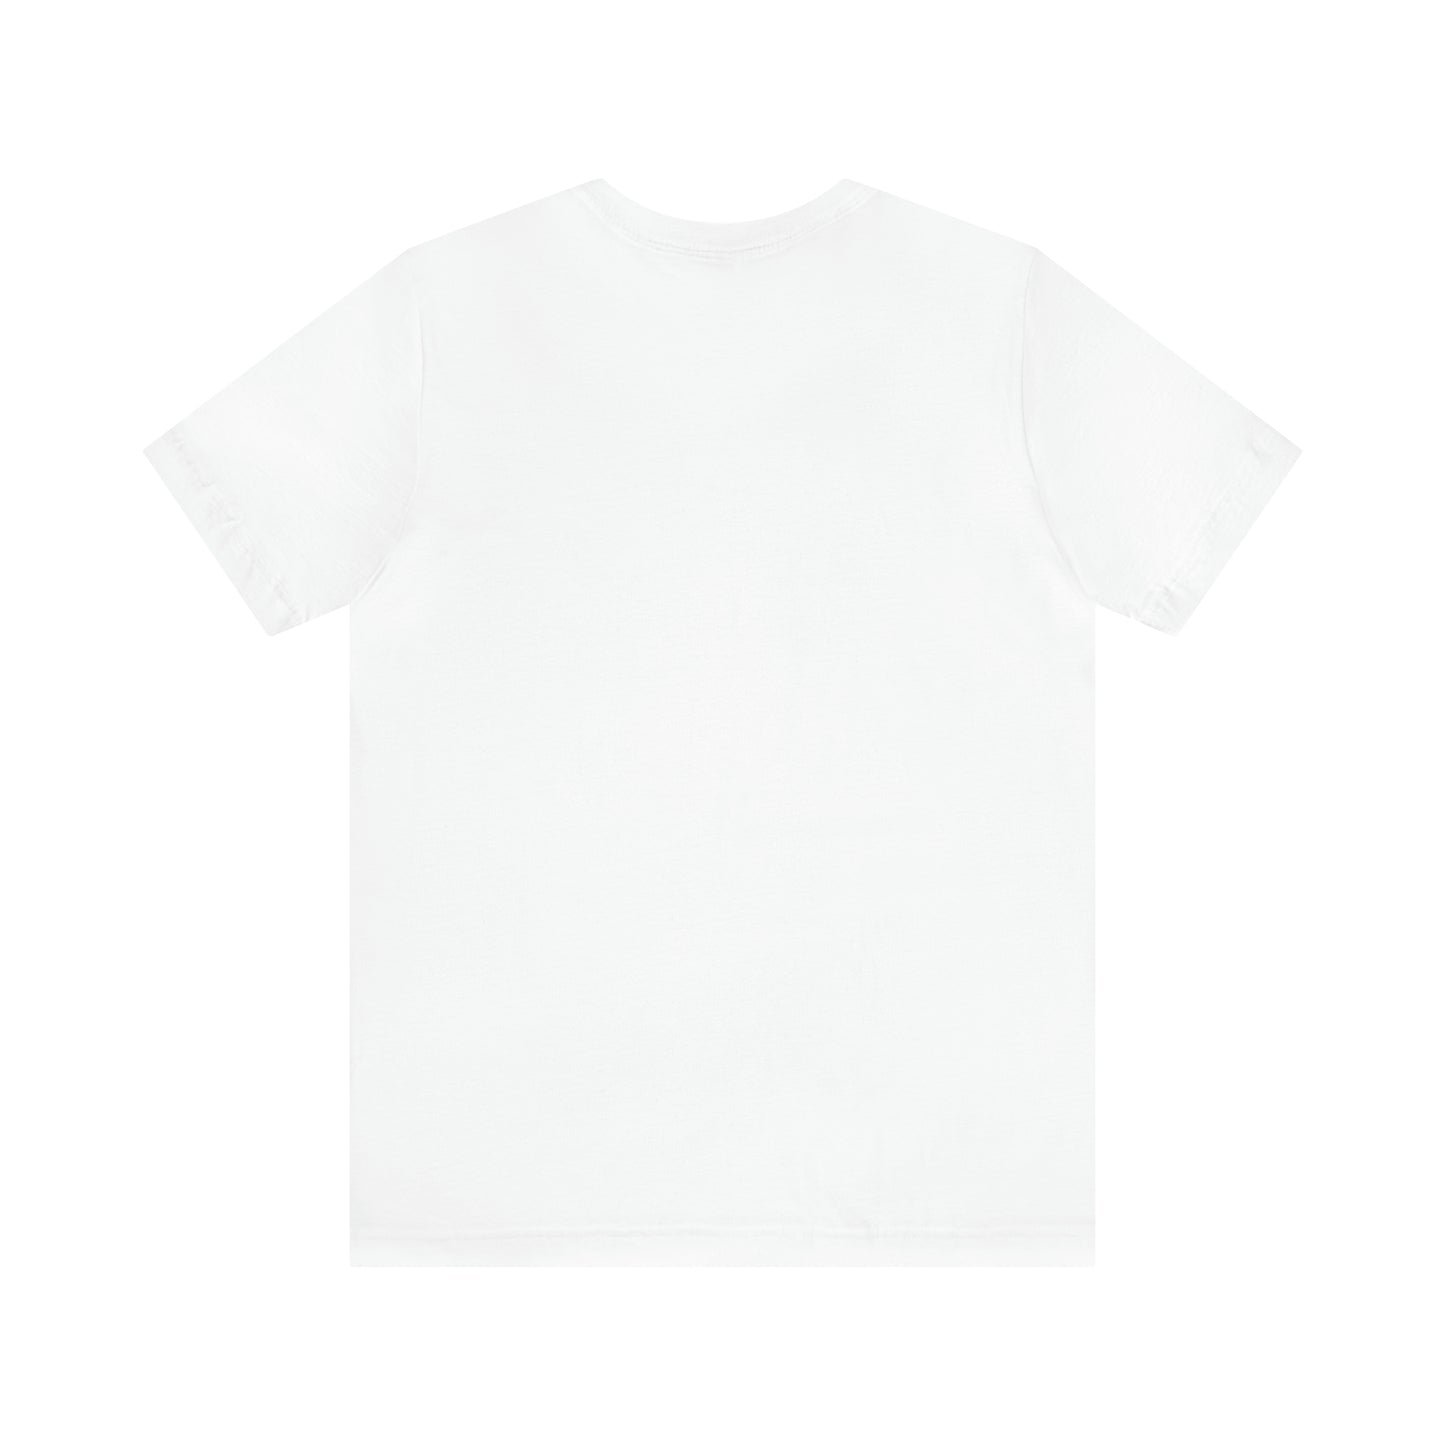 Unisex Slim-Fit T-Shirt "Lapki"